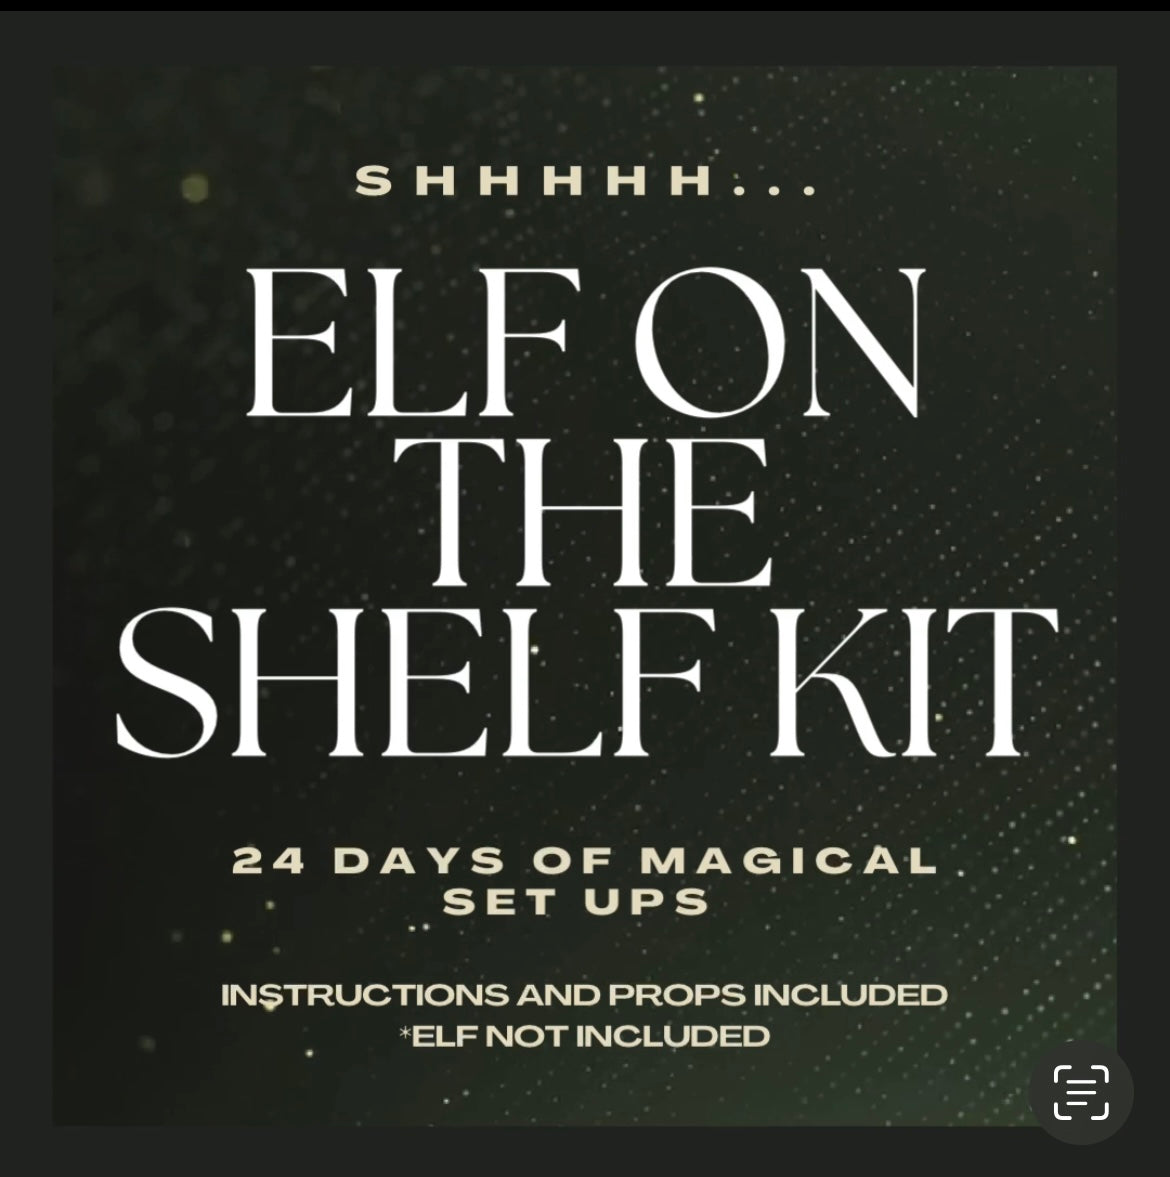 Elf on the Shelf Kit